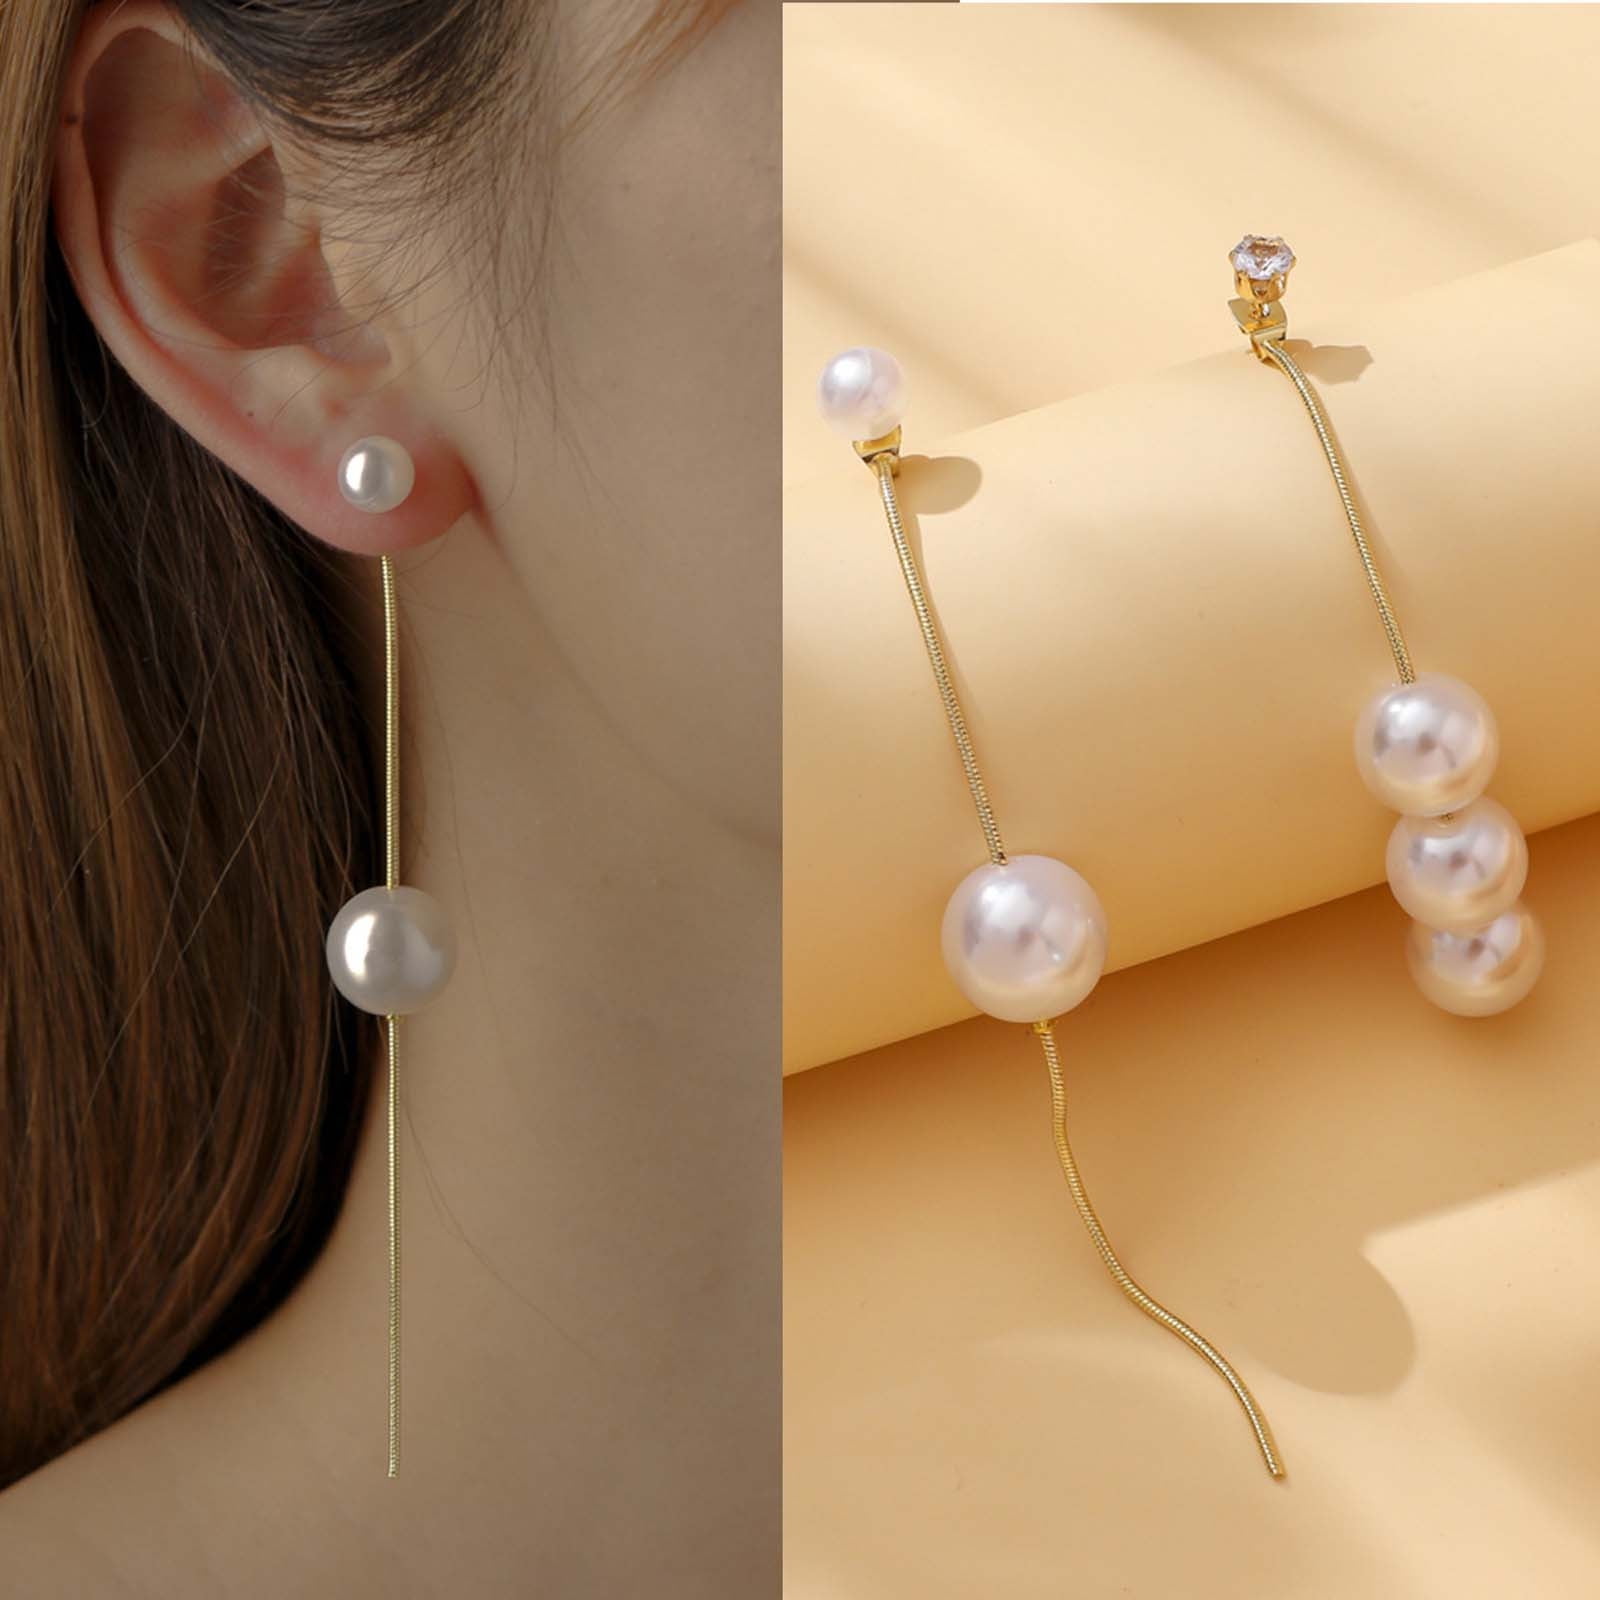 Pearl Earrings Design - Small Stud Earrings - Stud Earrings for Girls -  Luna Pearl Stud Earrings by Blingvine